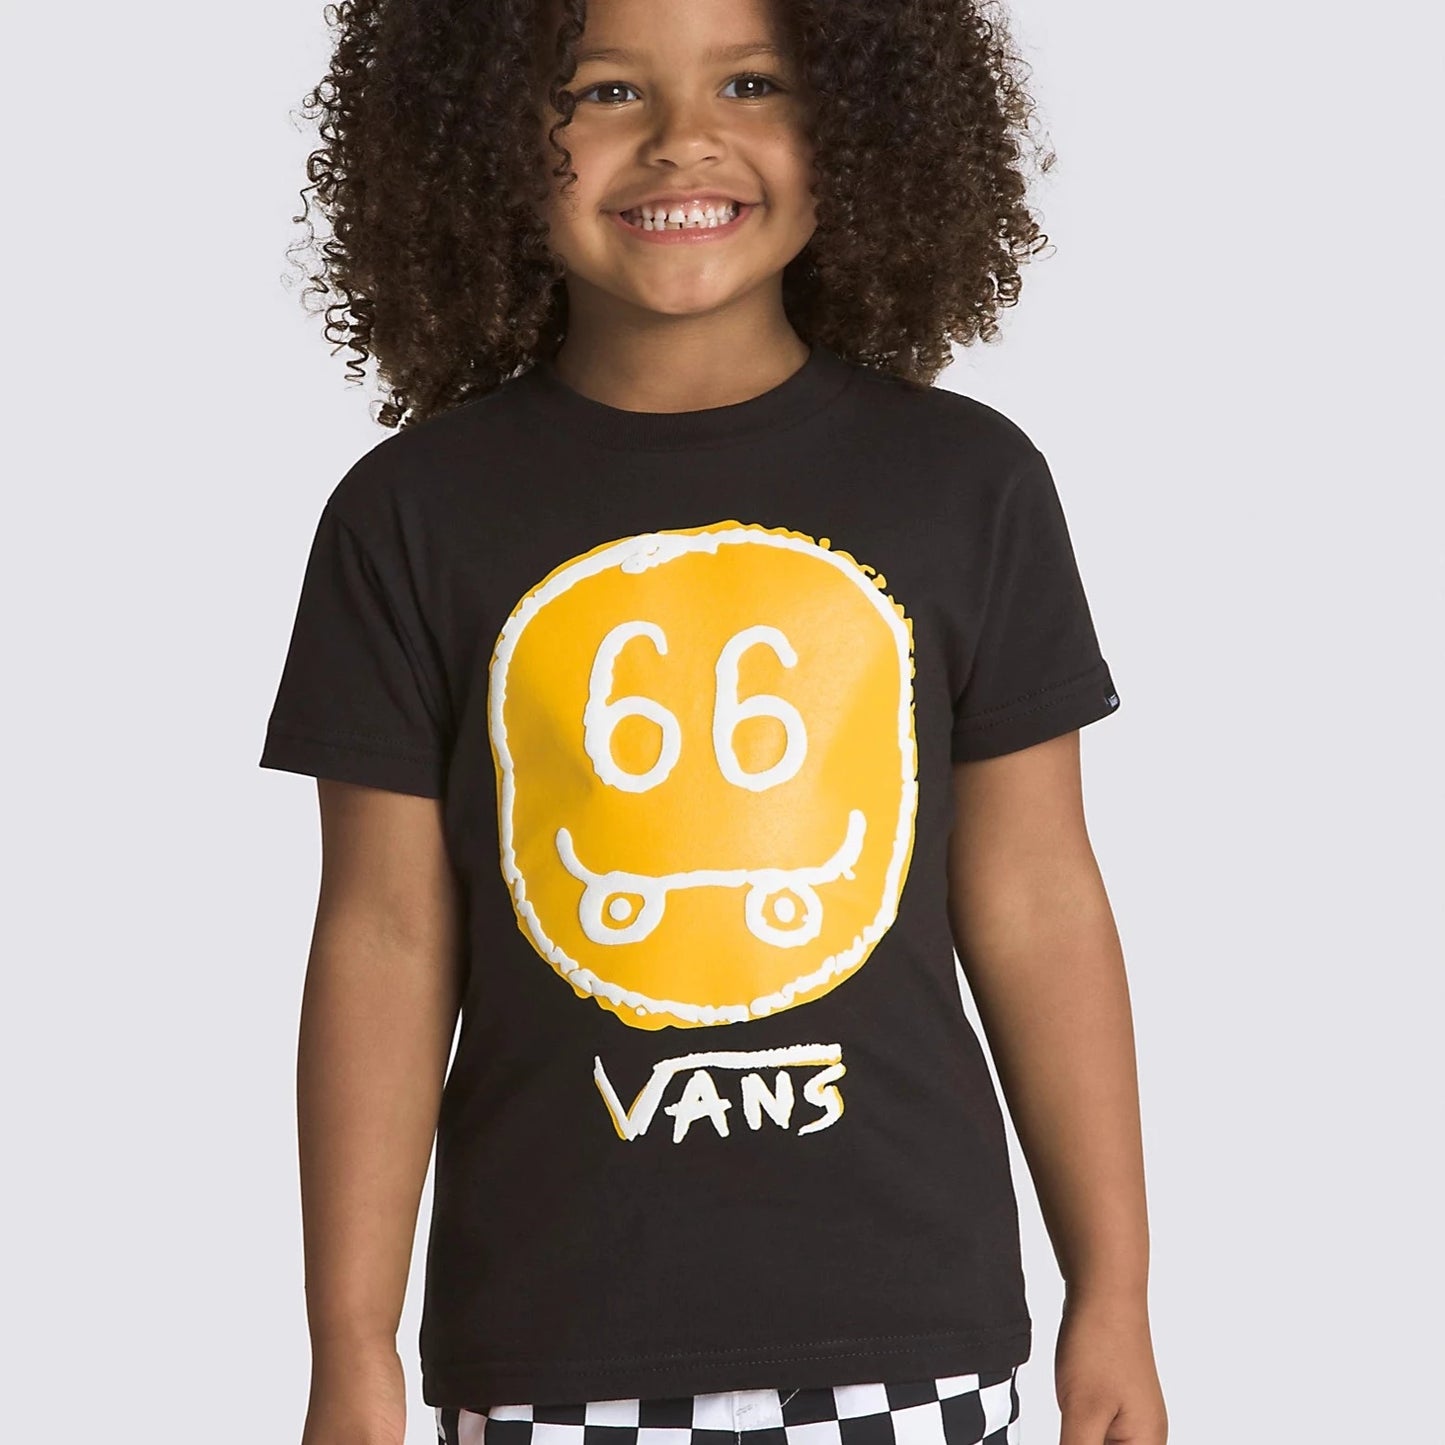 Vans Toddler 66 Smiles Short-Sleeve Shirt - Black Boys T Shirt